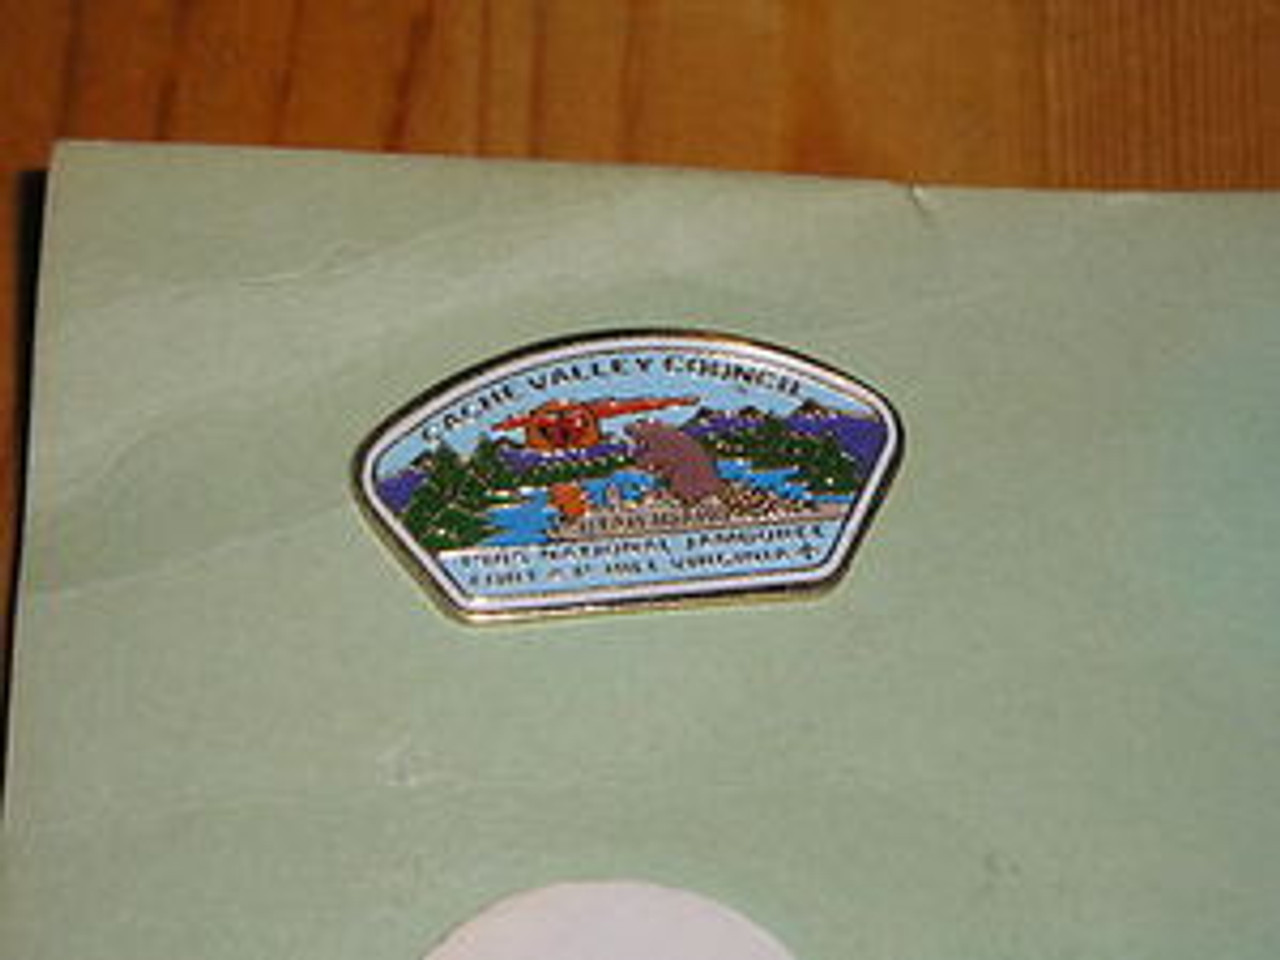 1985 National Jamboree Cache Valley Council JSP Shaped Pin